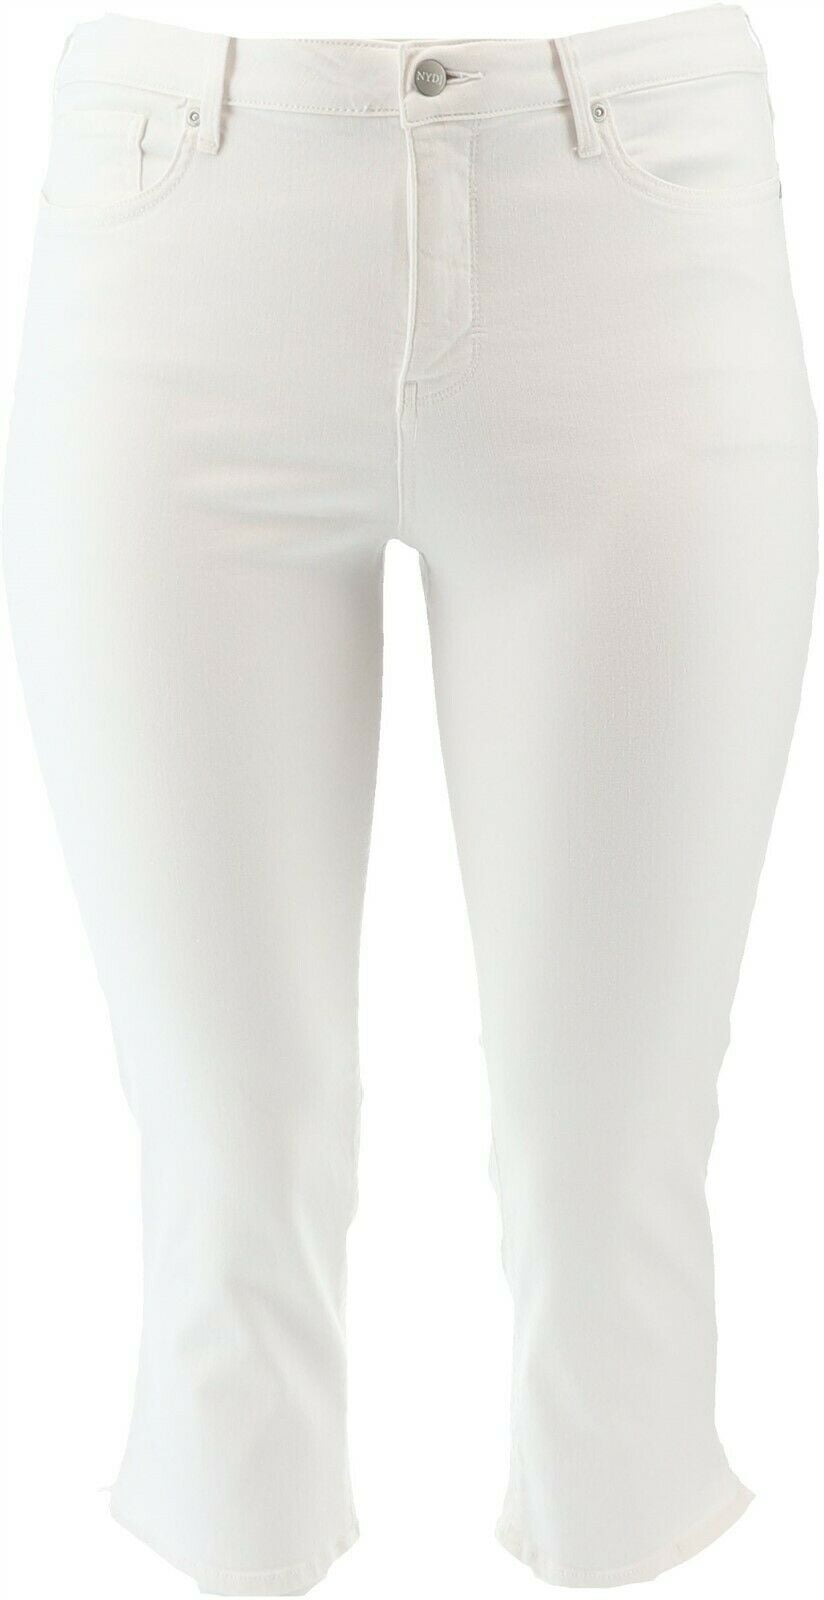 NYDJ - NYDJ Skinny Capri Jeans Side Slits -Optic White Women's A350795 ...